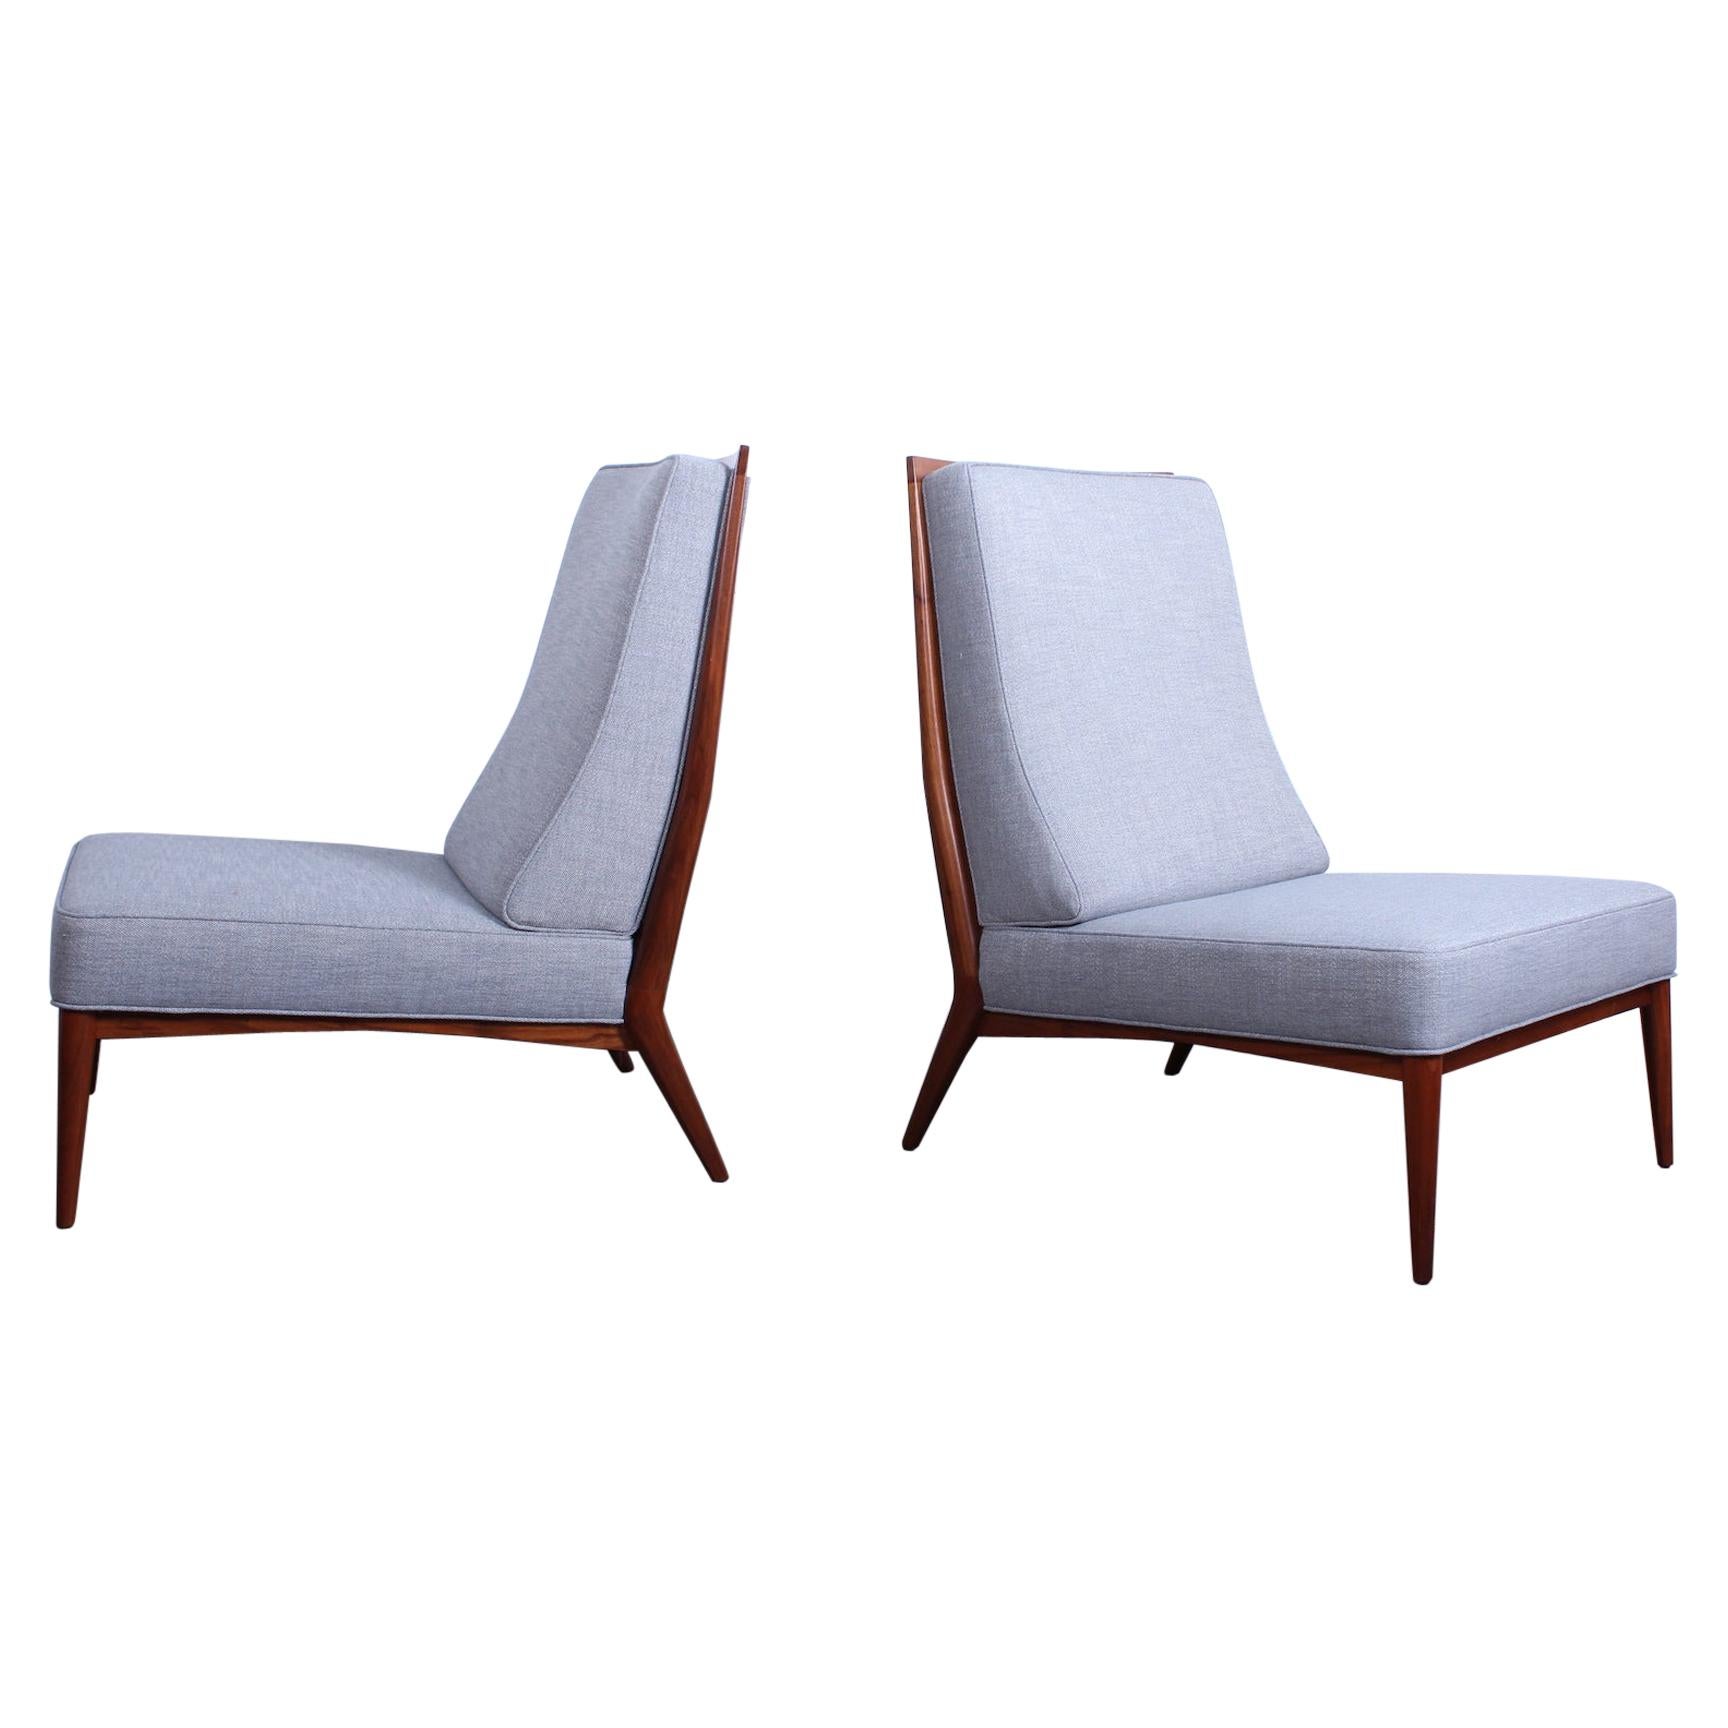 Pair of Slipper Chairs by Paul McCobb